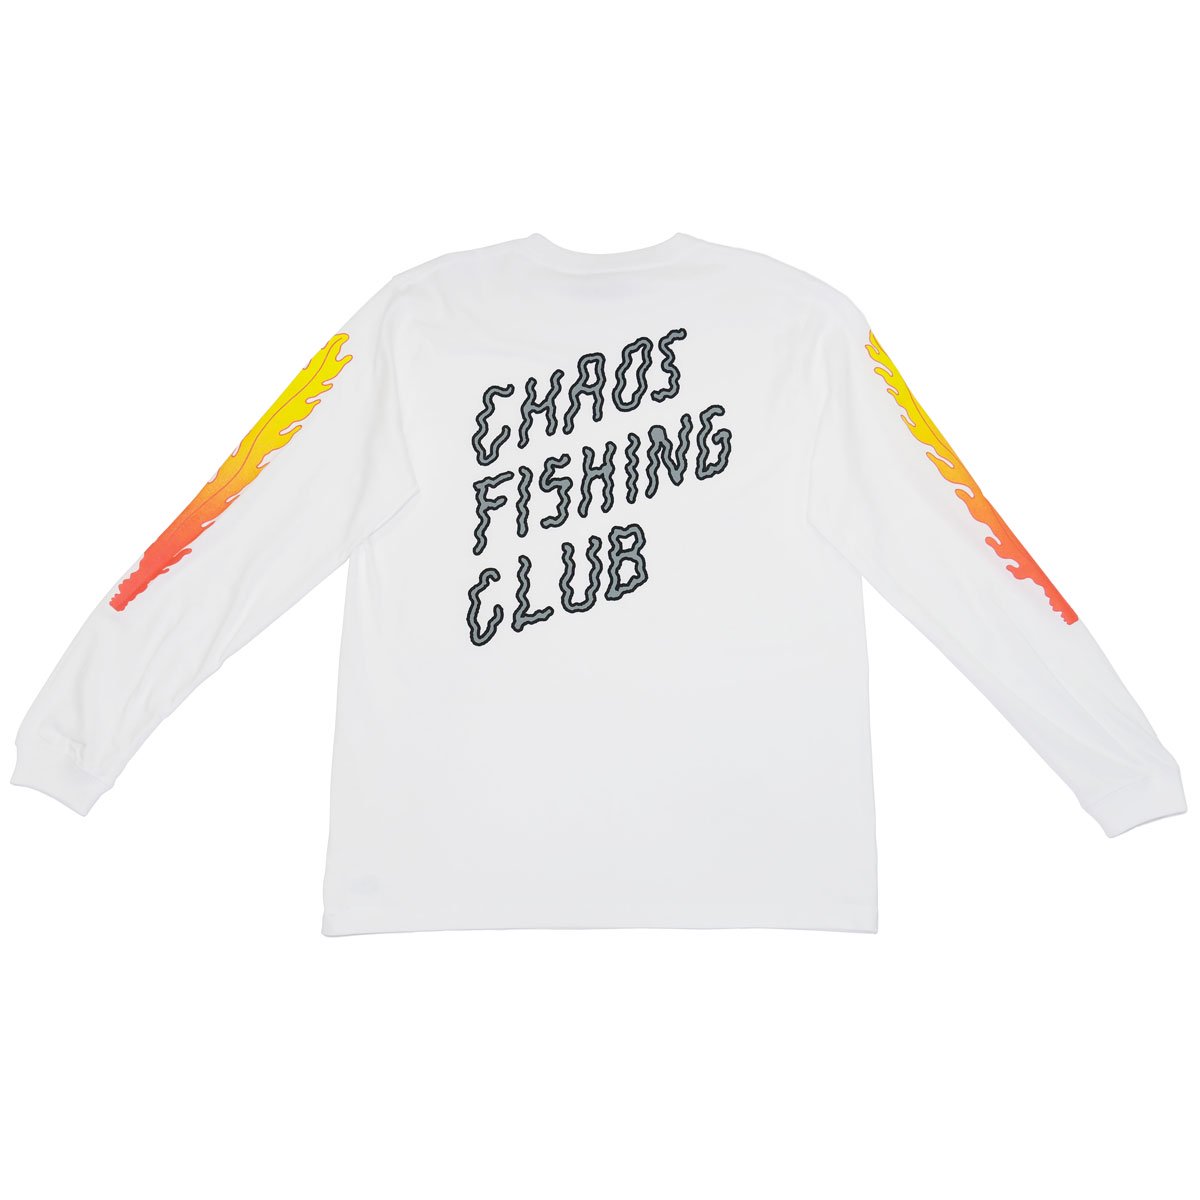 Chaos Fishing Club - SEE KUSH L/S TEE - White - SHRED